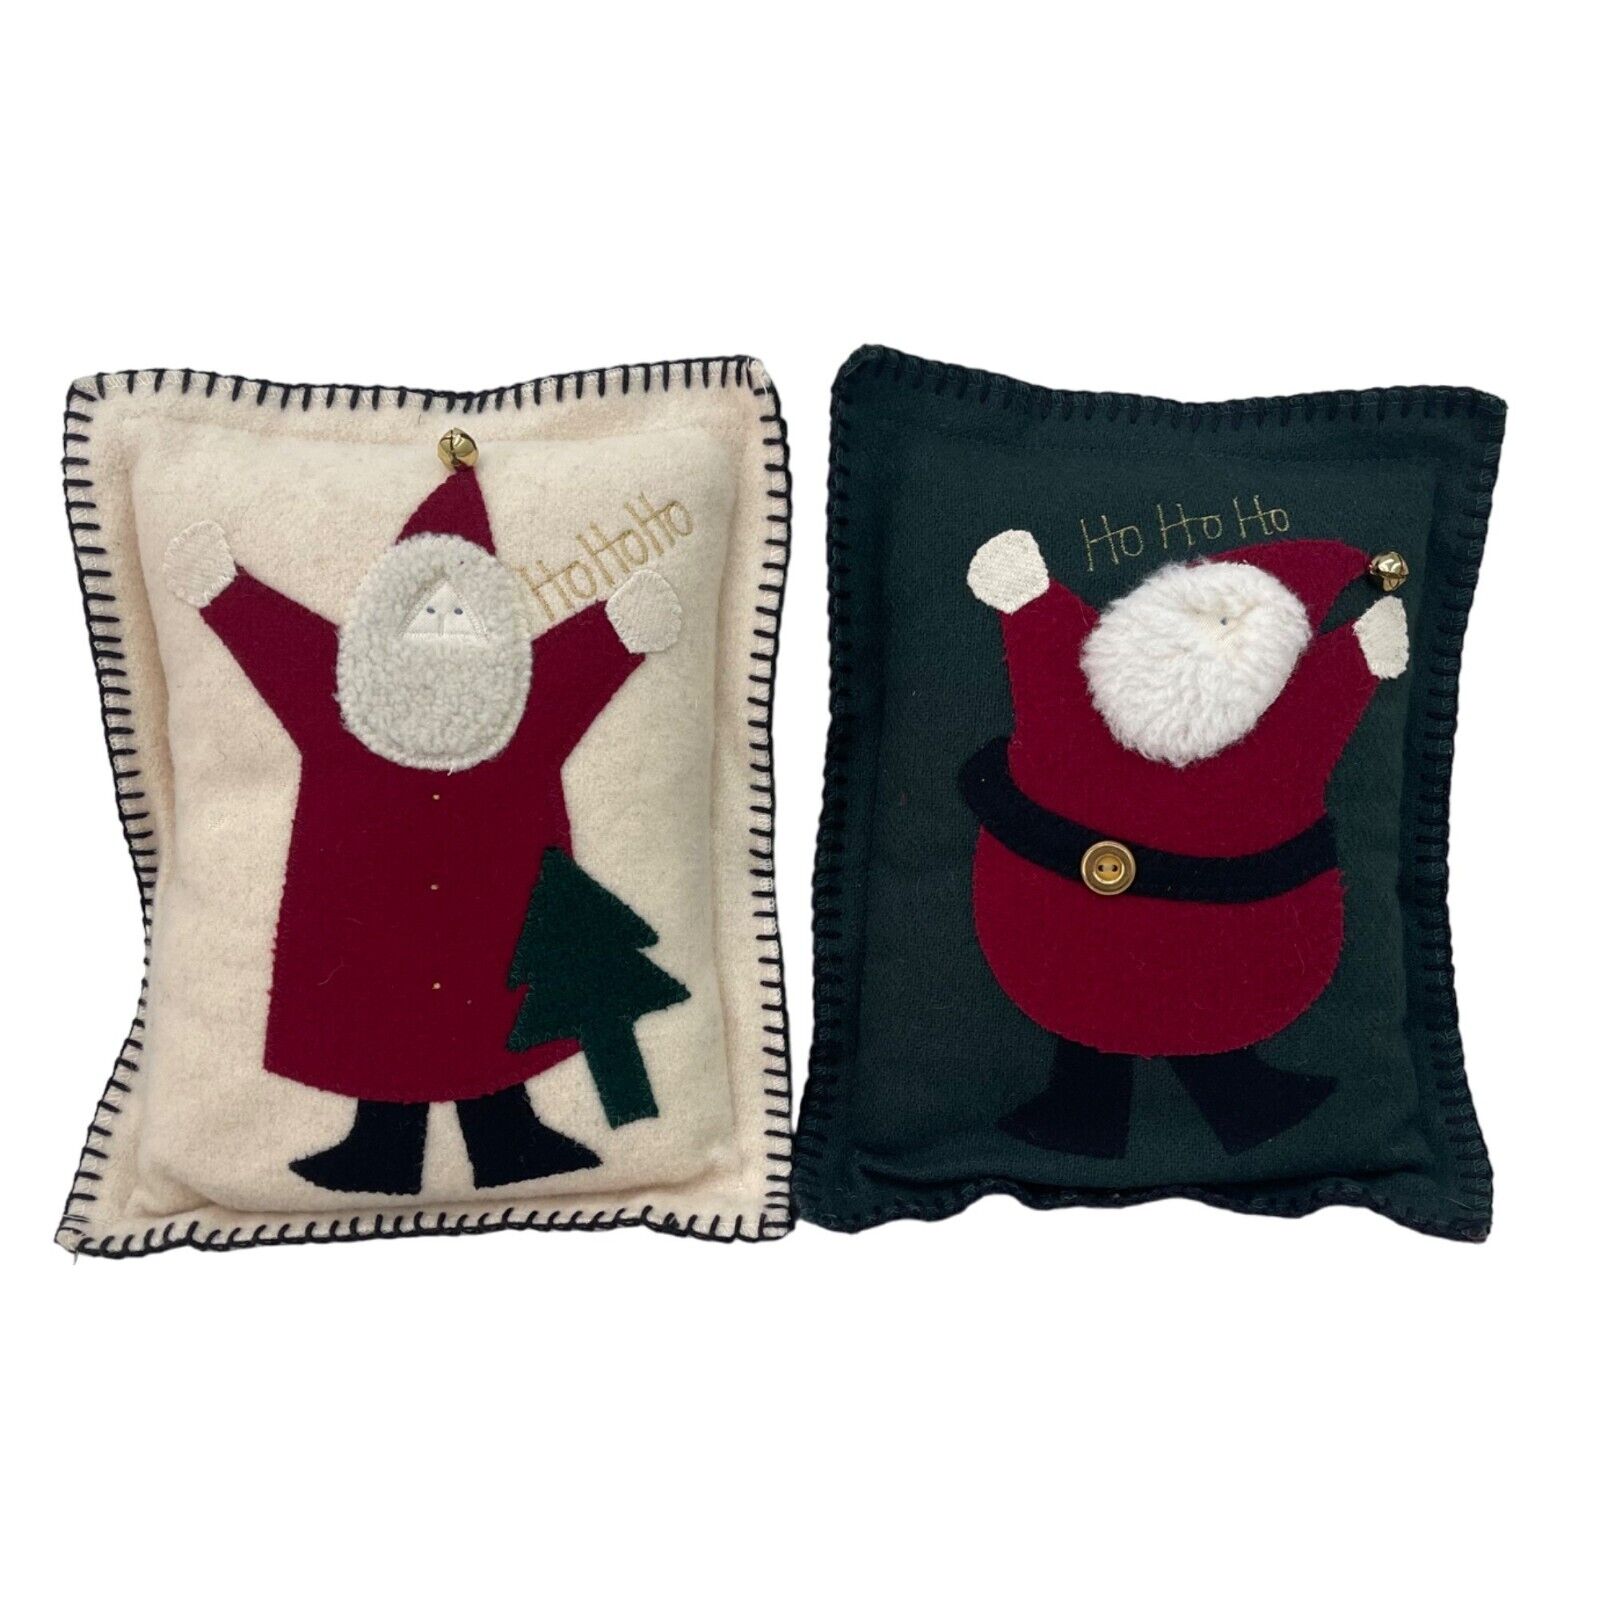 VTG 1999 Woof & Poof Santa Applique Throw Pillow Bundle Christmas Holiday Decor